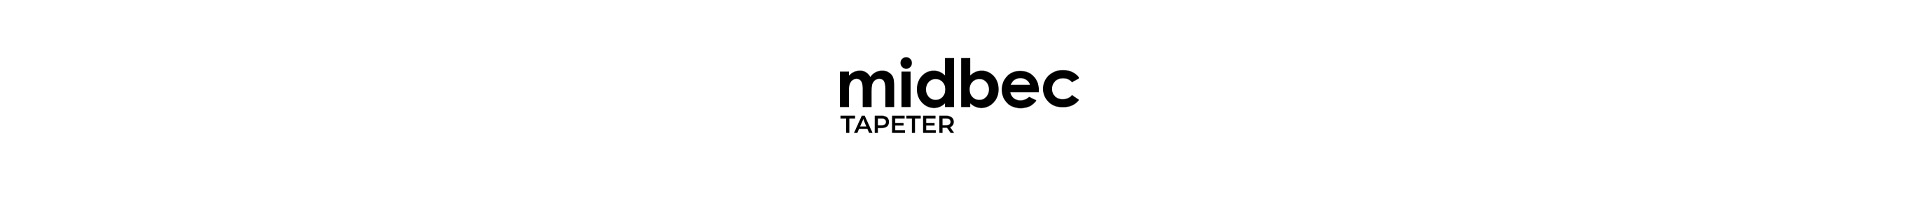 Midbec tapeter